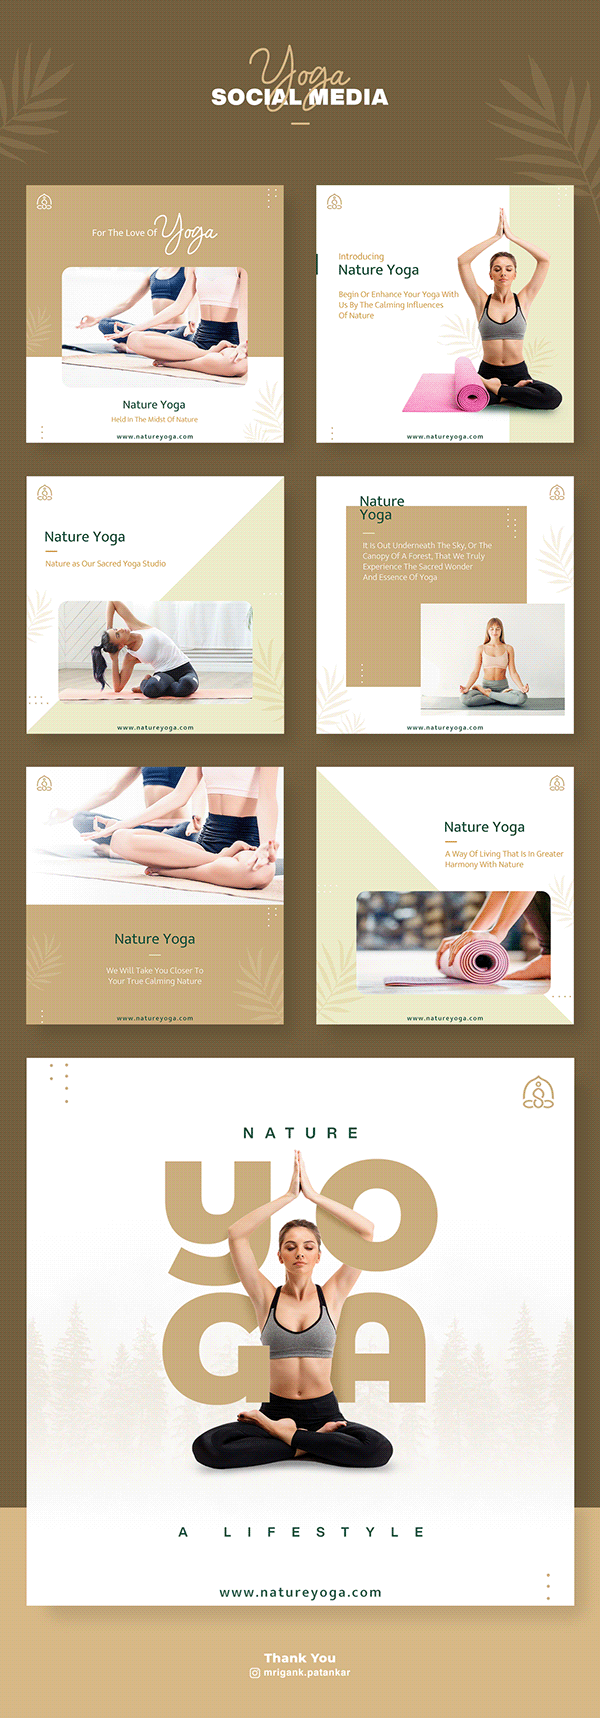 Yoga | Social Media Design